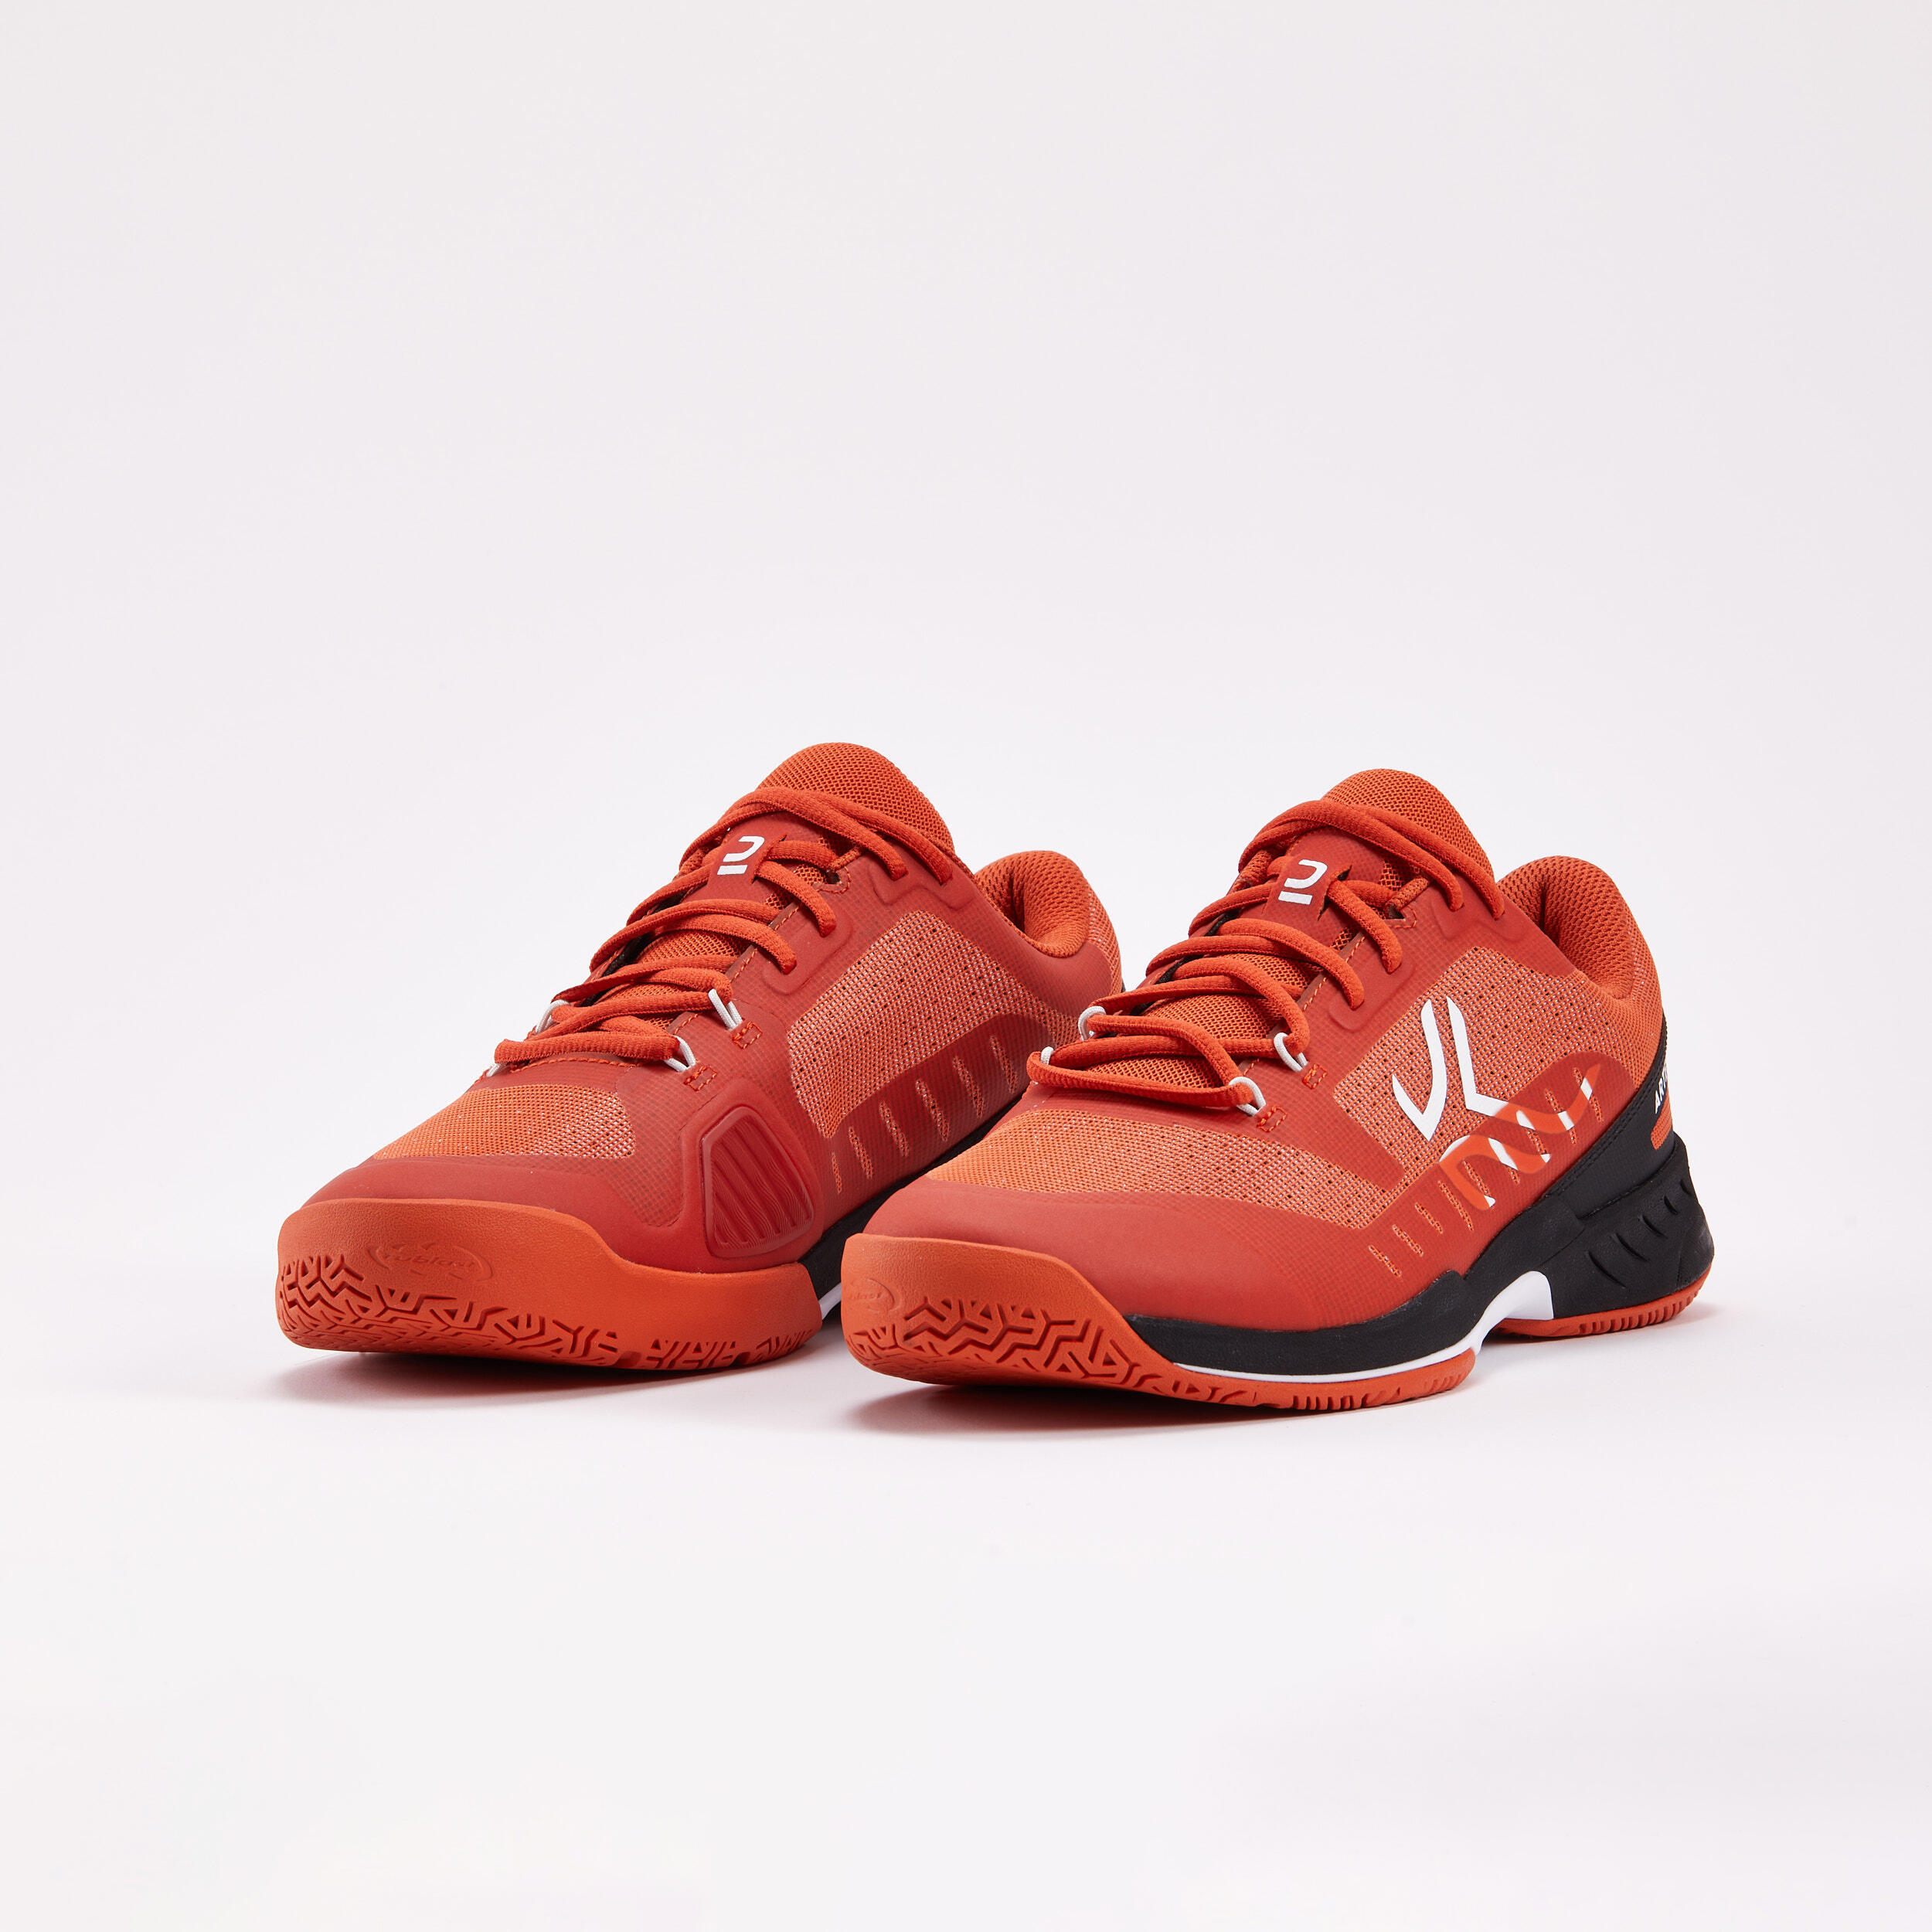 Men's Multicourt Tennis Shoes Fast - Terracotta Red/Black 4/9